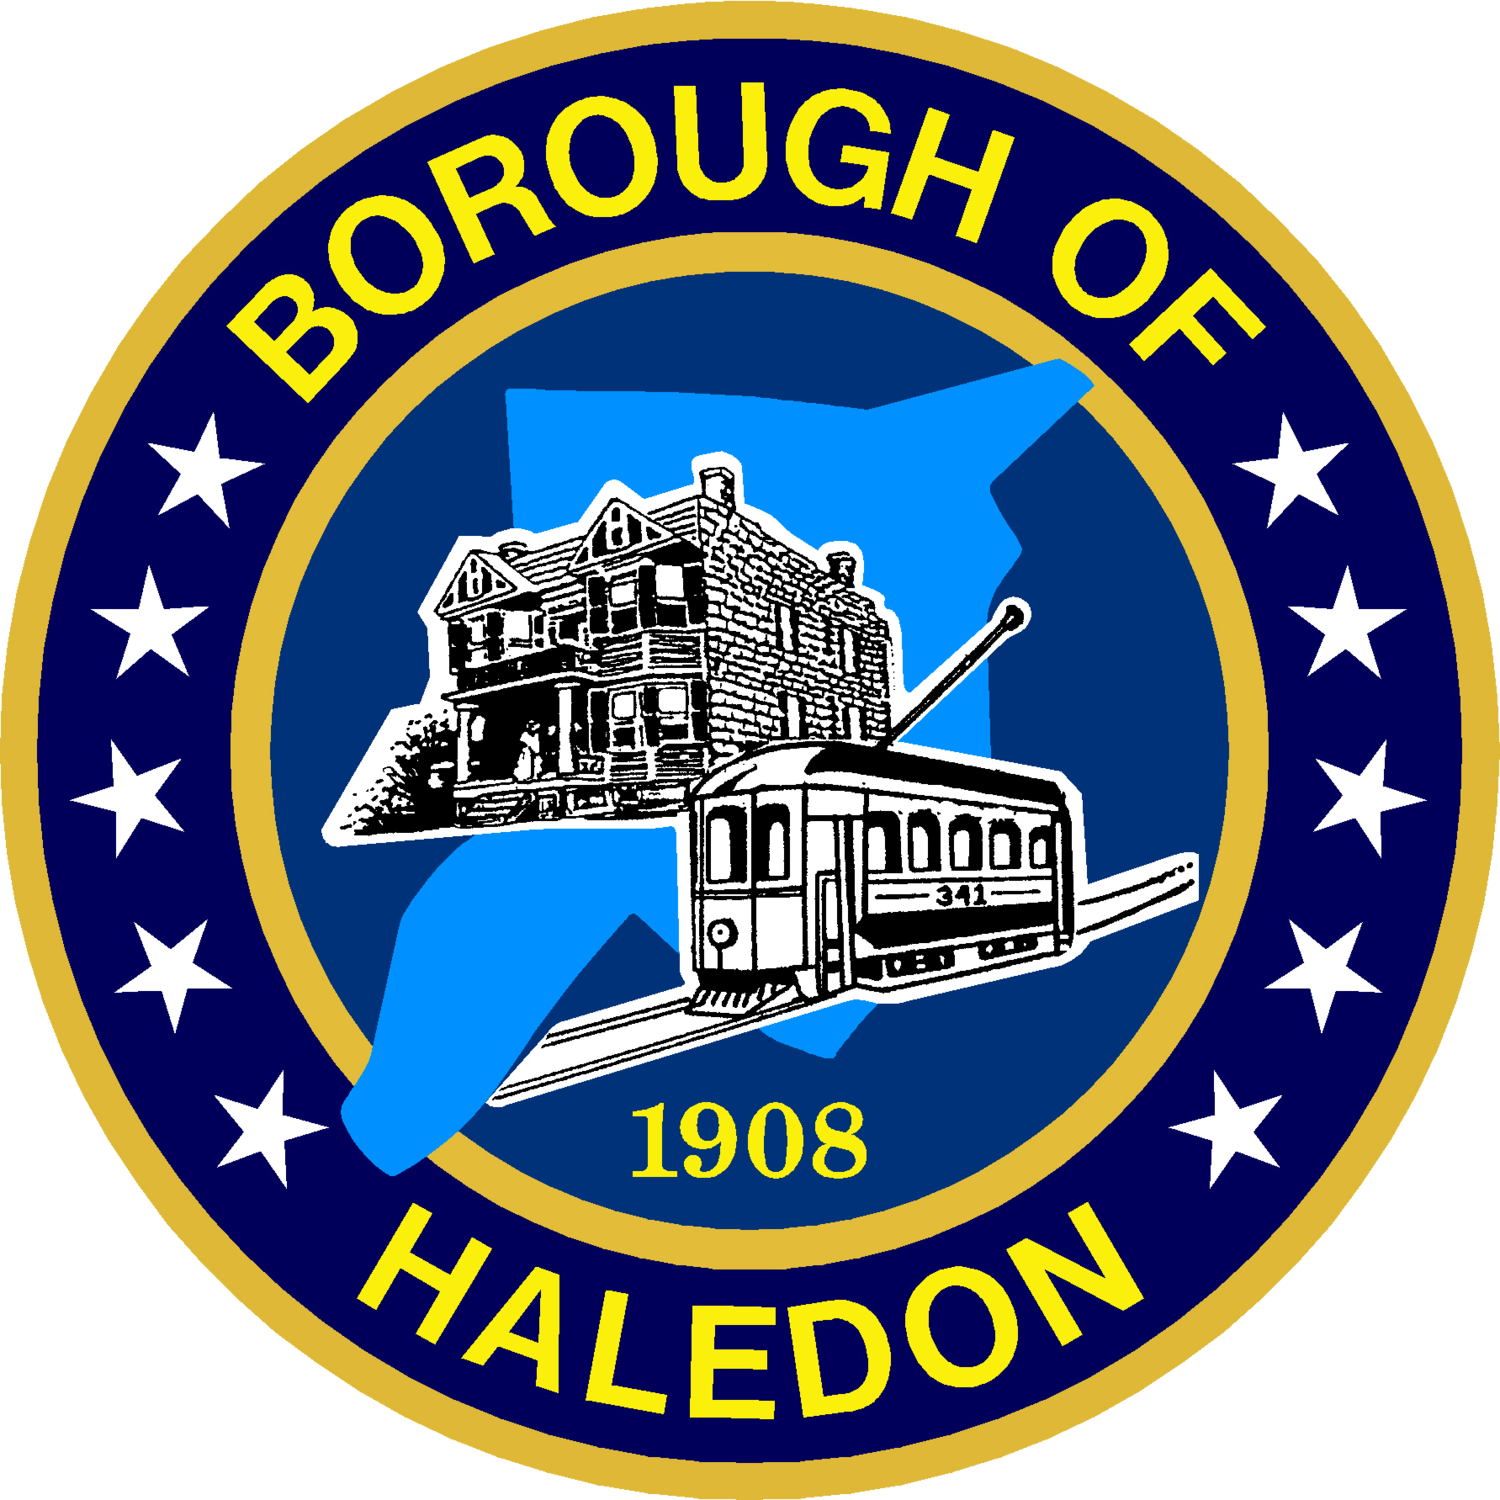 Borough of Haledon